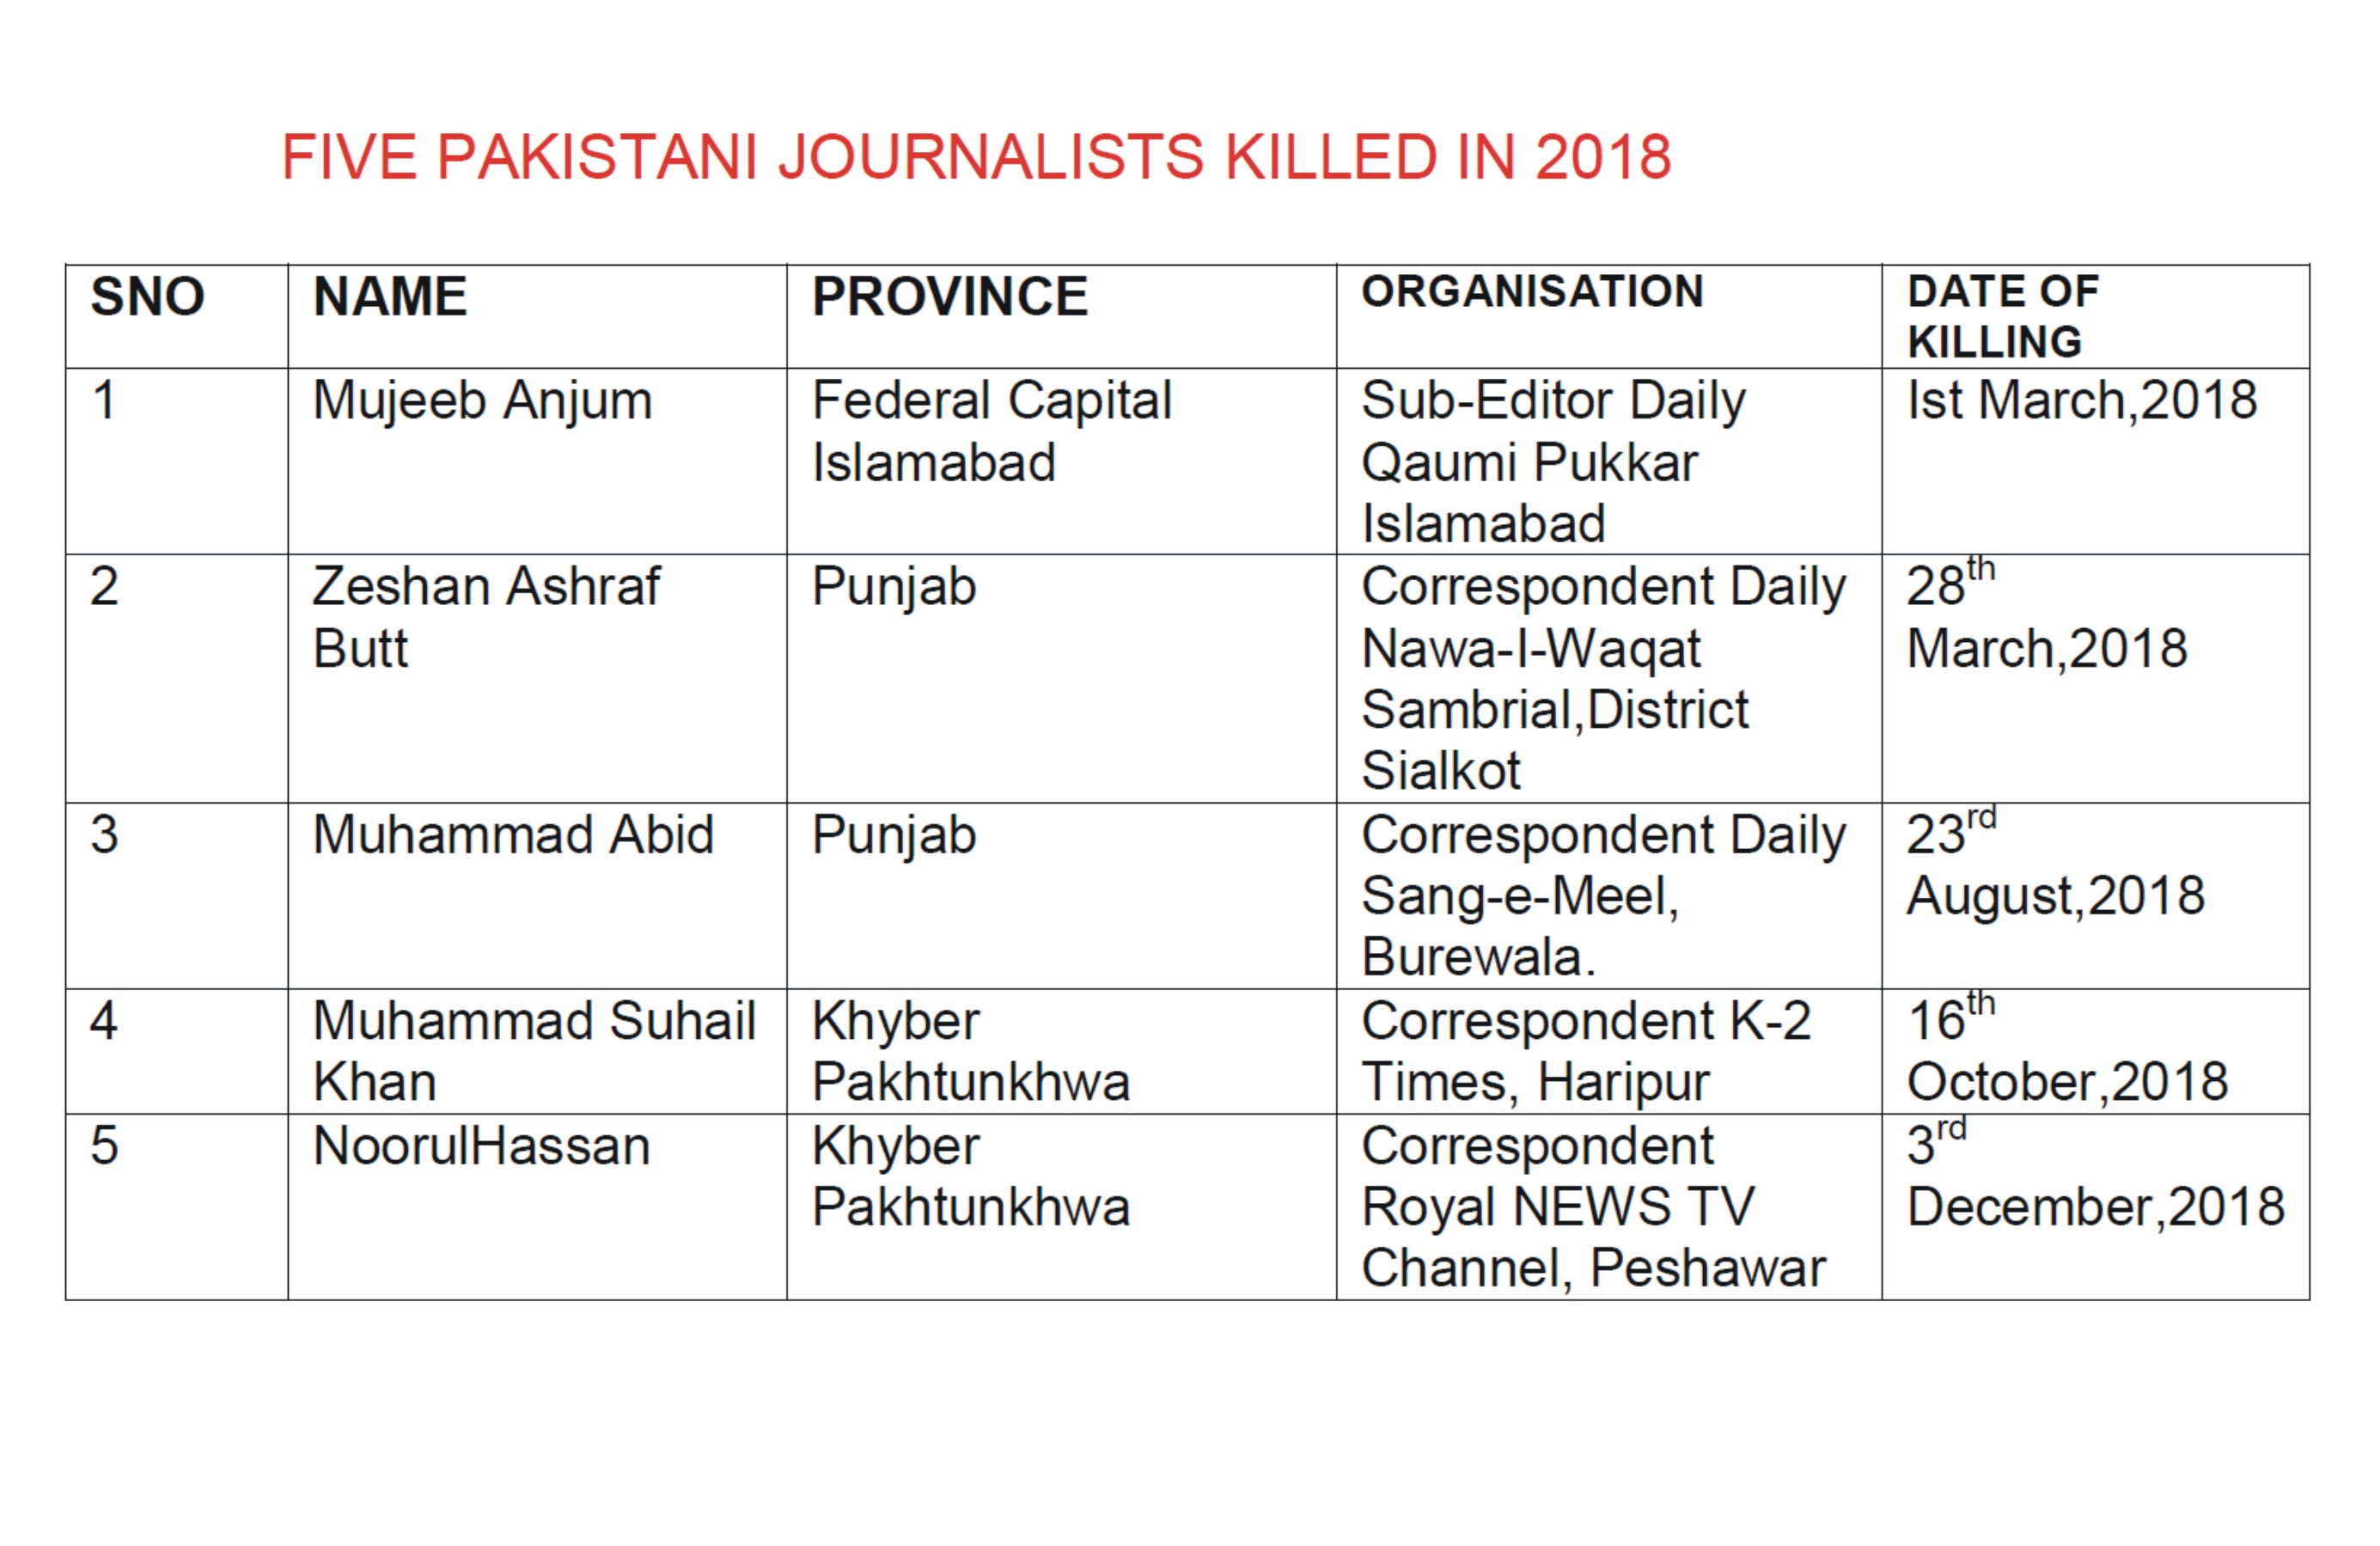 FIVE PAKISTANI JOURNALISTS in 2018